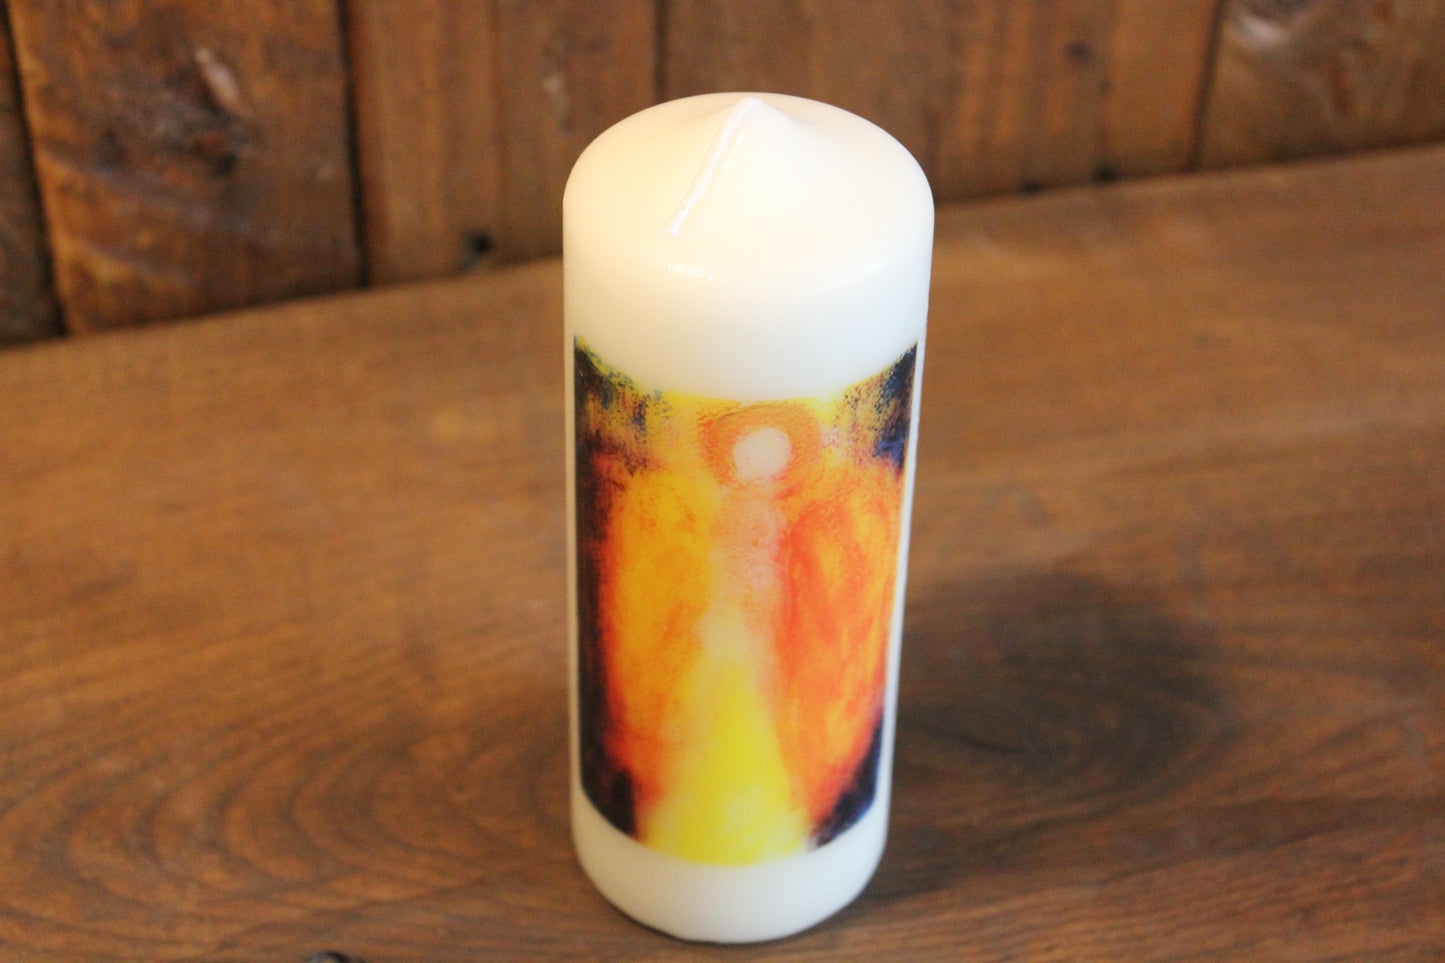 Angel Pillar Candle